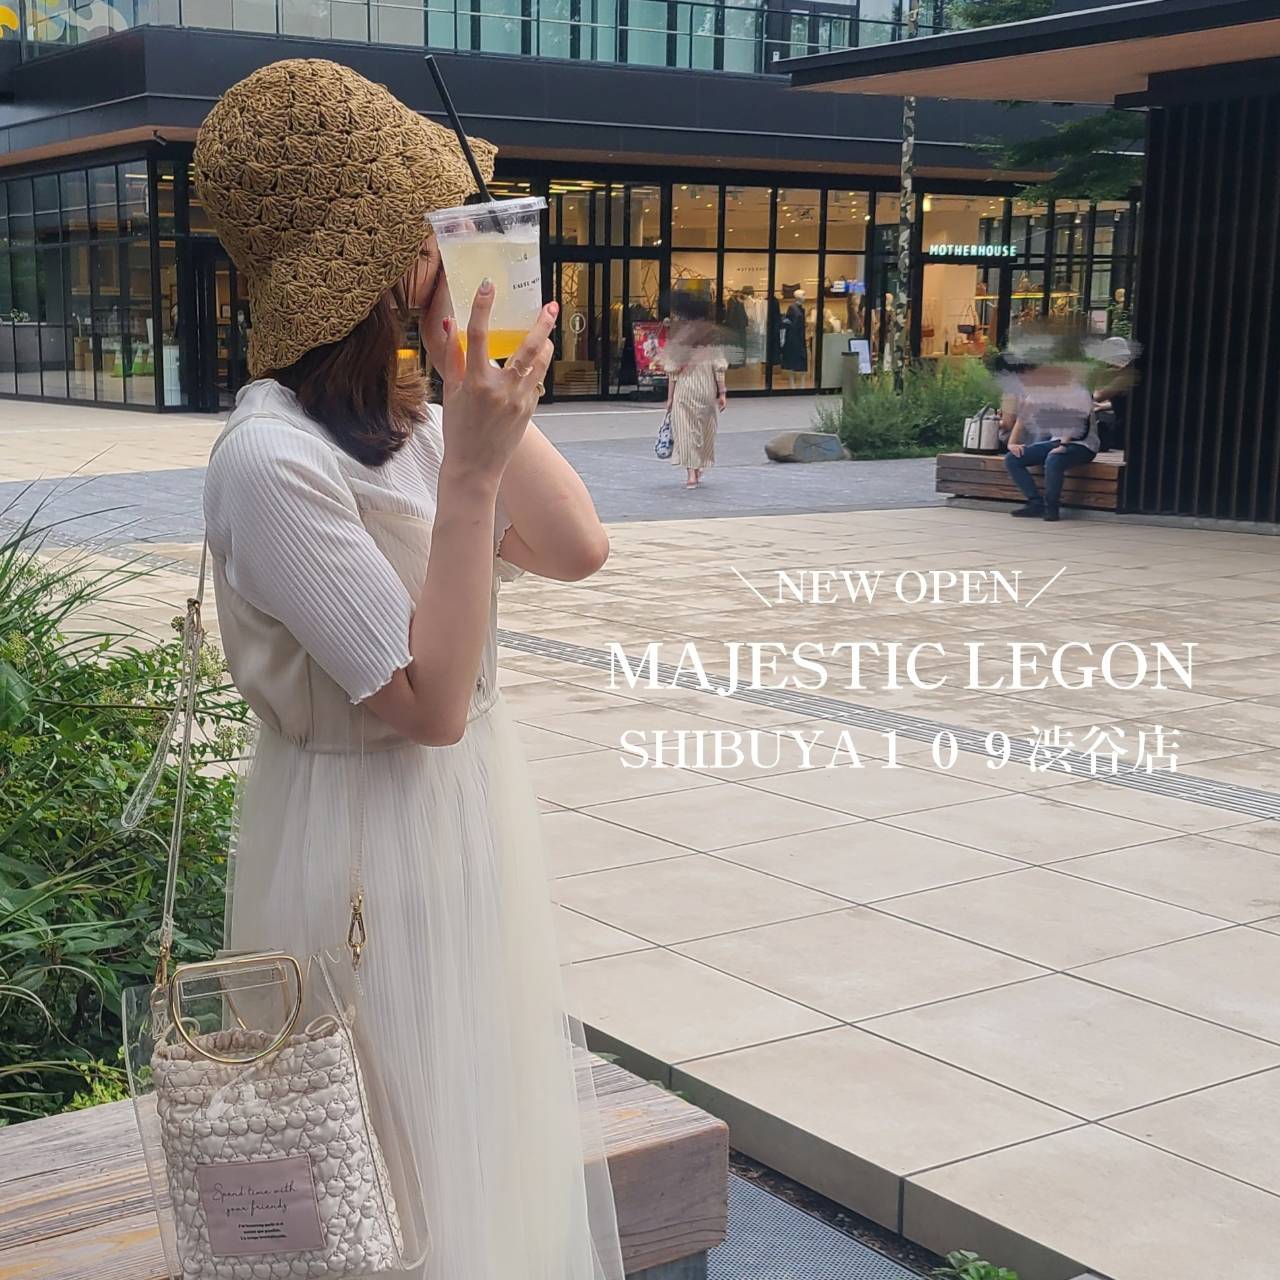 NEW OPEN!! «MAJESTIC LEGON SHIBUYA109渋谷店»